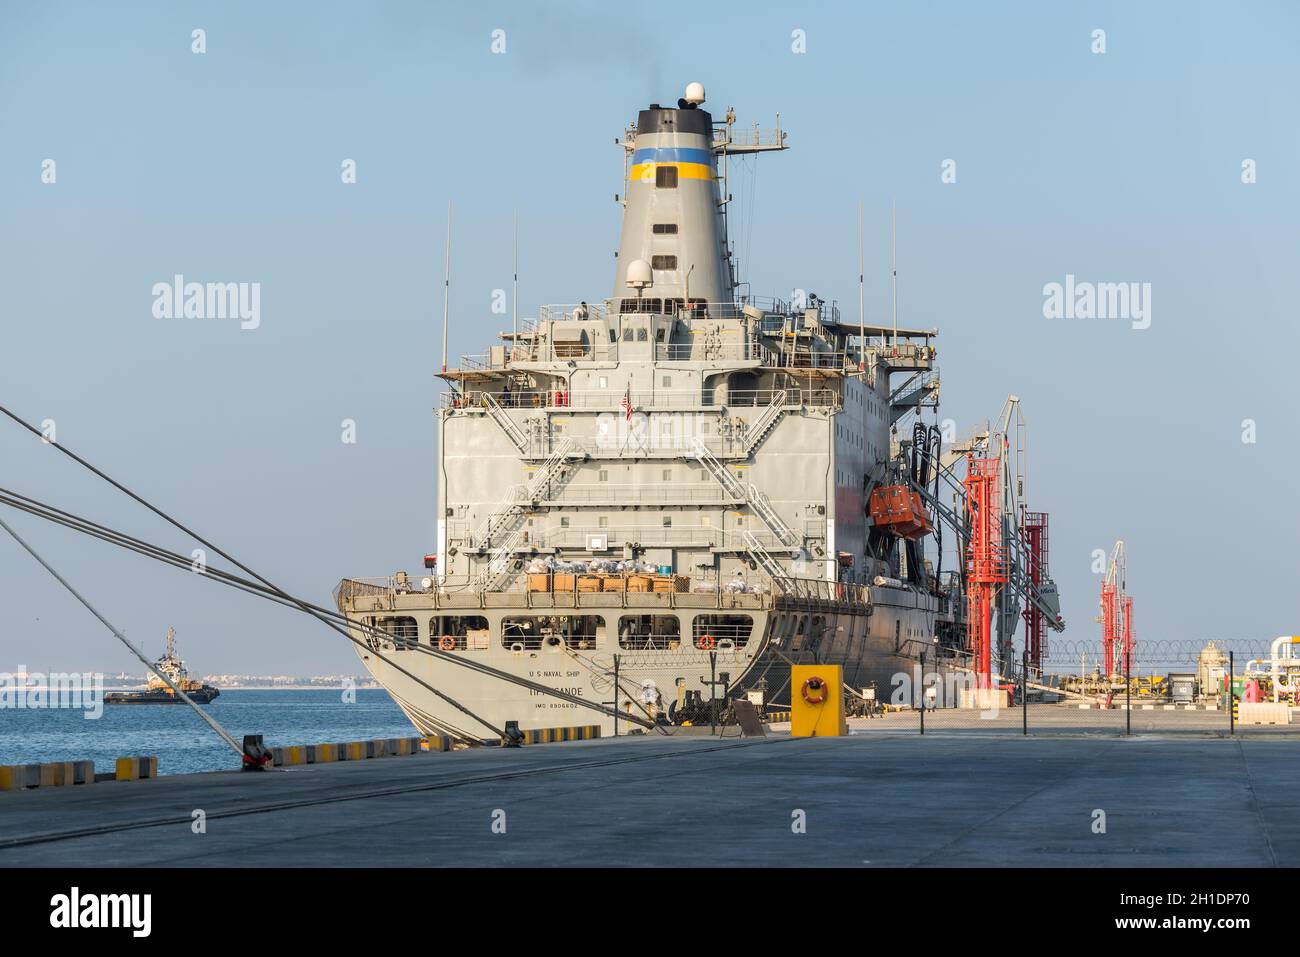 Salalah, Oman - 12. November 2017: US Naval Schiff USS Tippecanoe (Replenishment) im Hafen von Salalah im Oman, Indischer Ozean günstig. Stockfoto